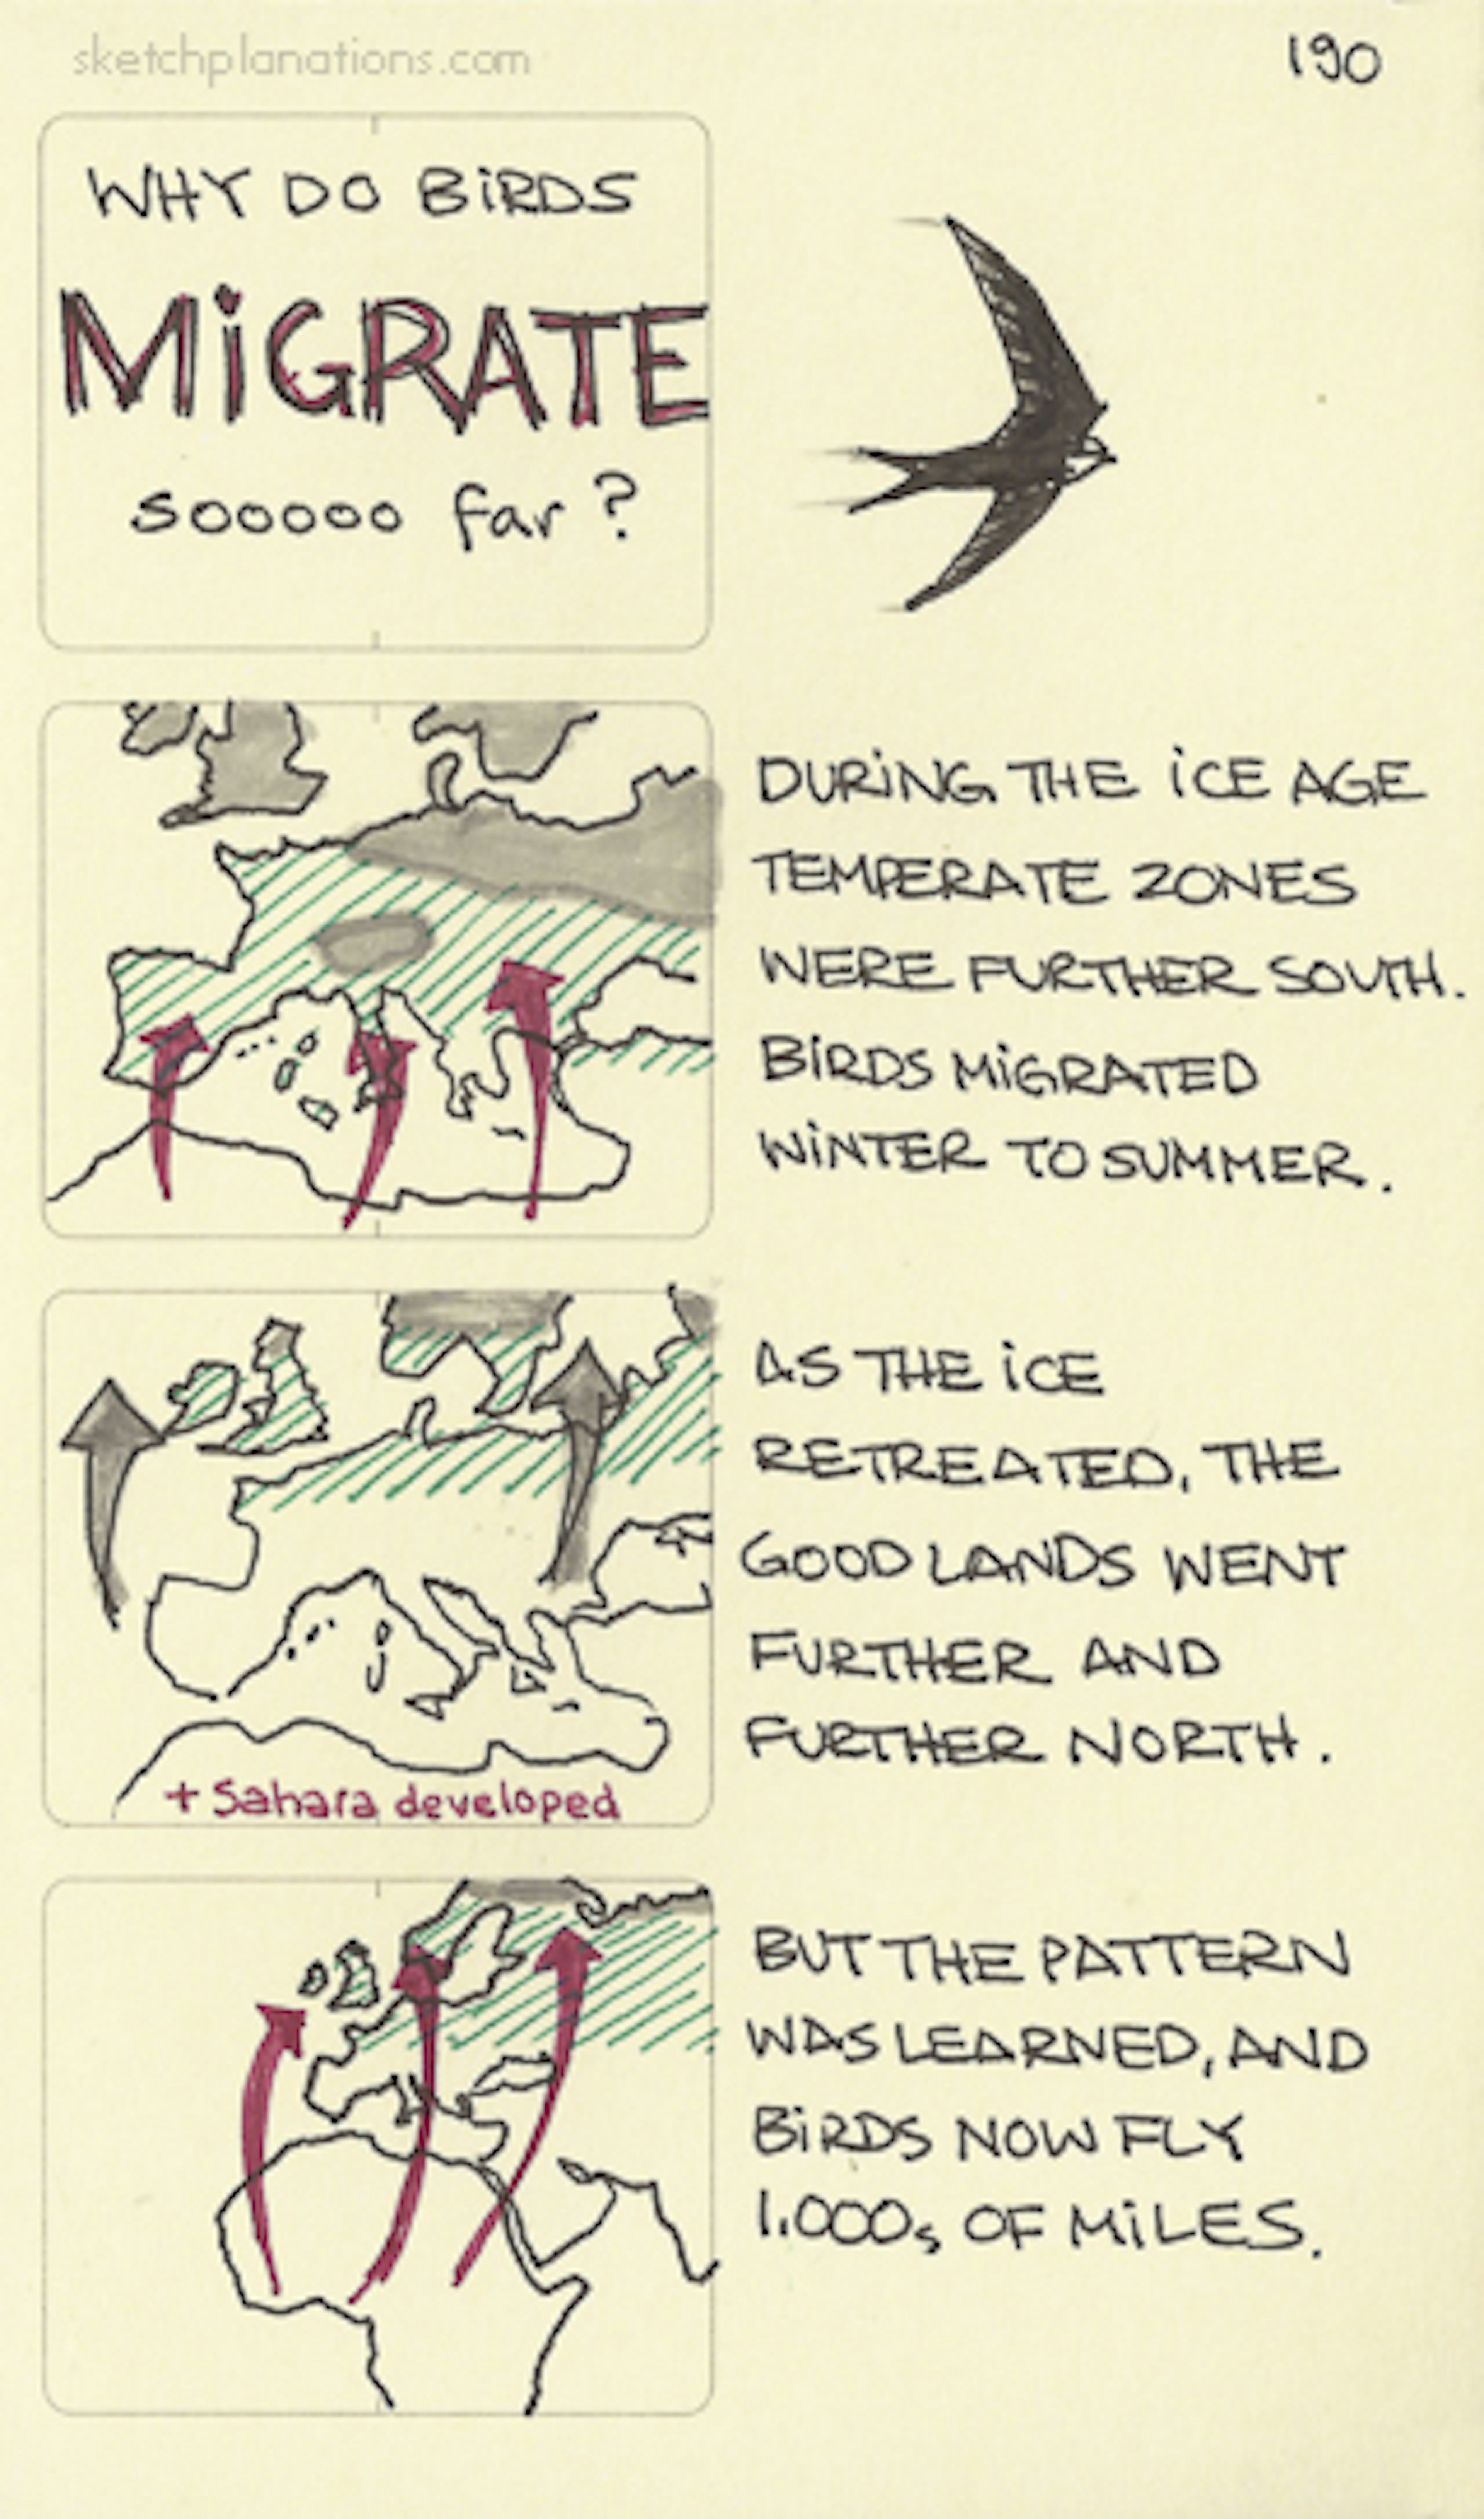 Why do birds migrate sooooo far? - Sketchplanations